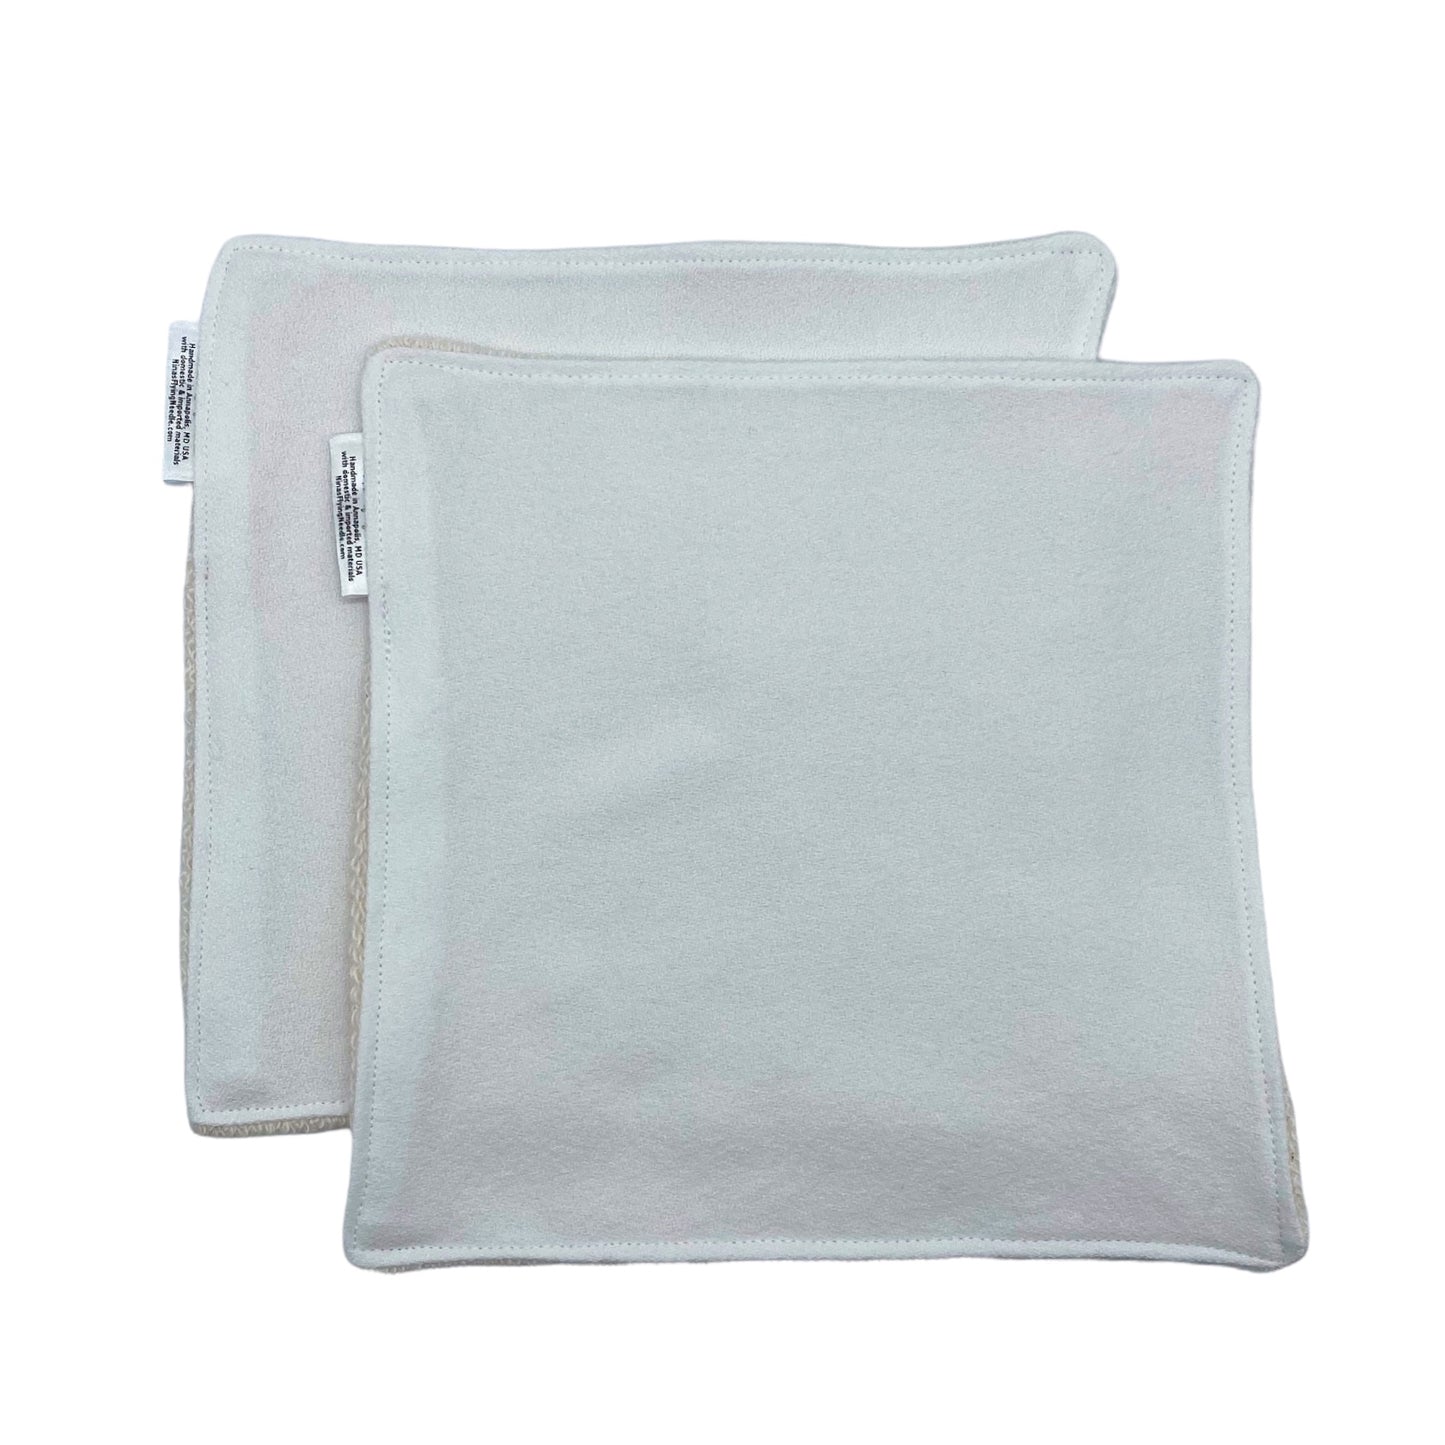 Wash Cloth - Regular - Solid White